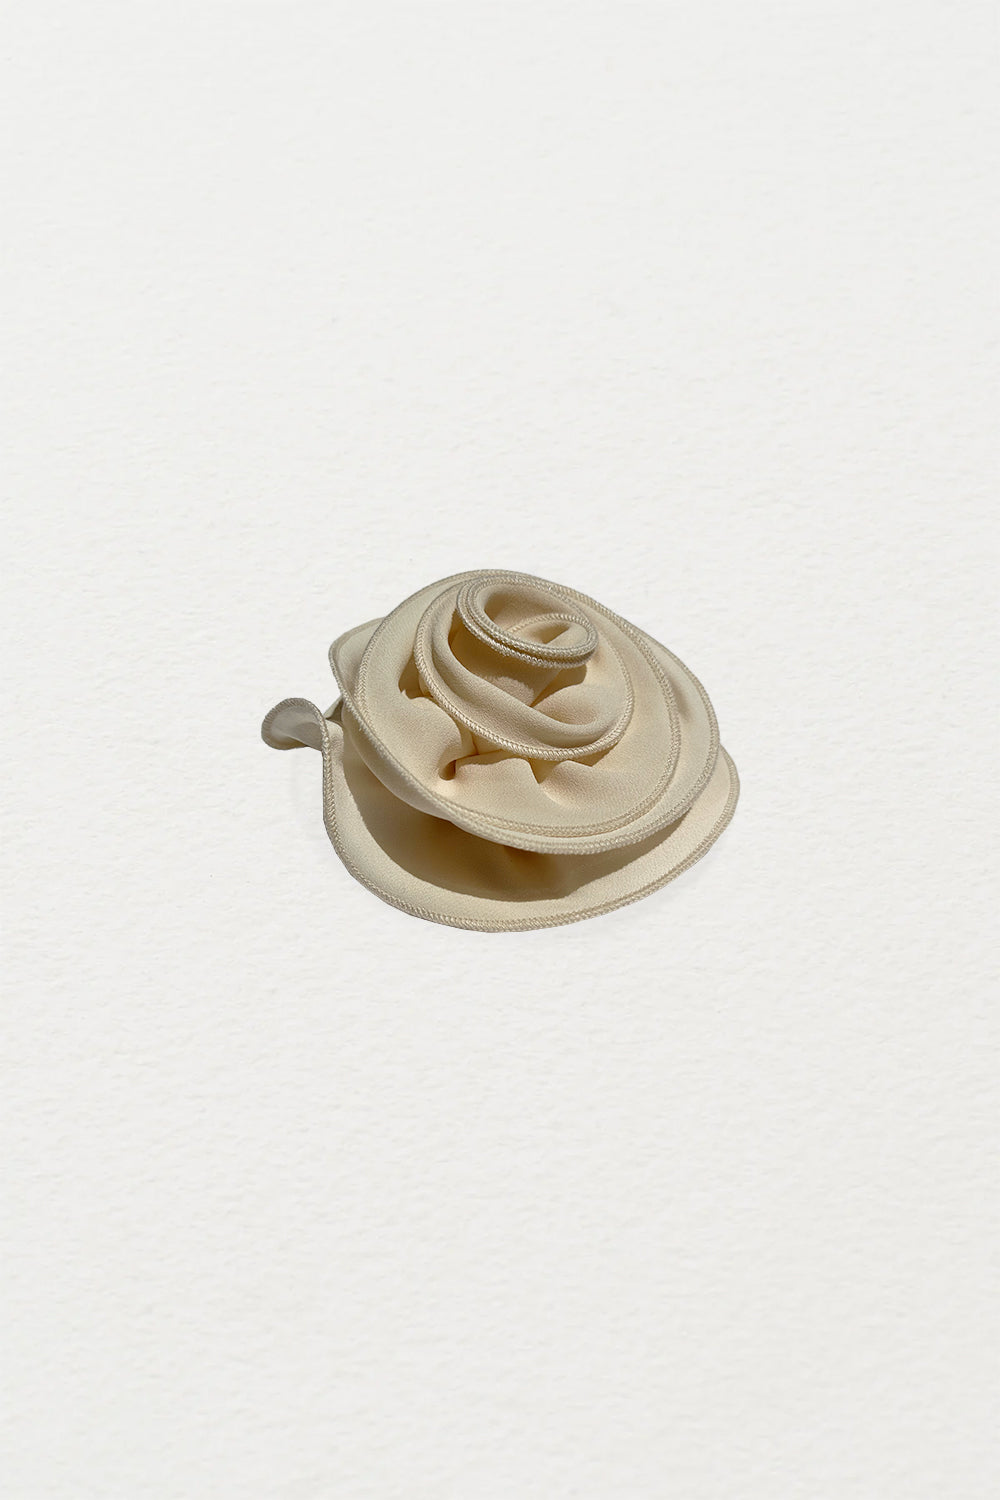 Flower Pin in Cream